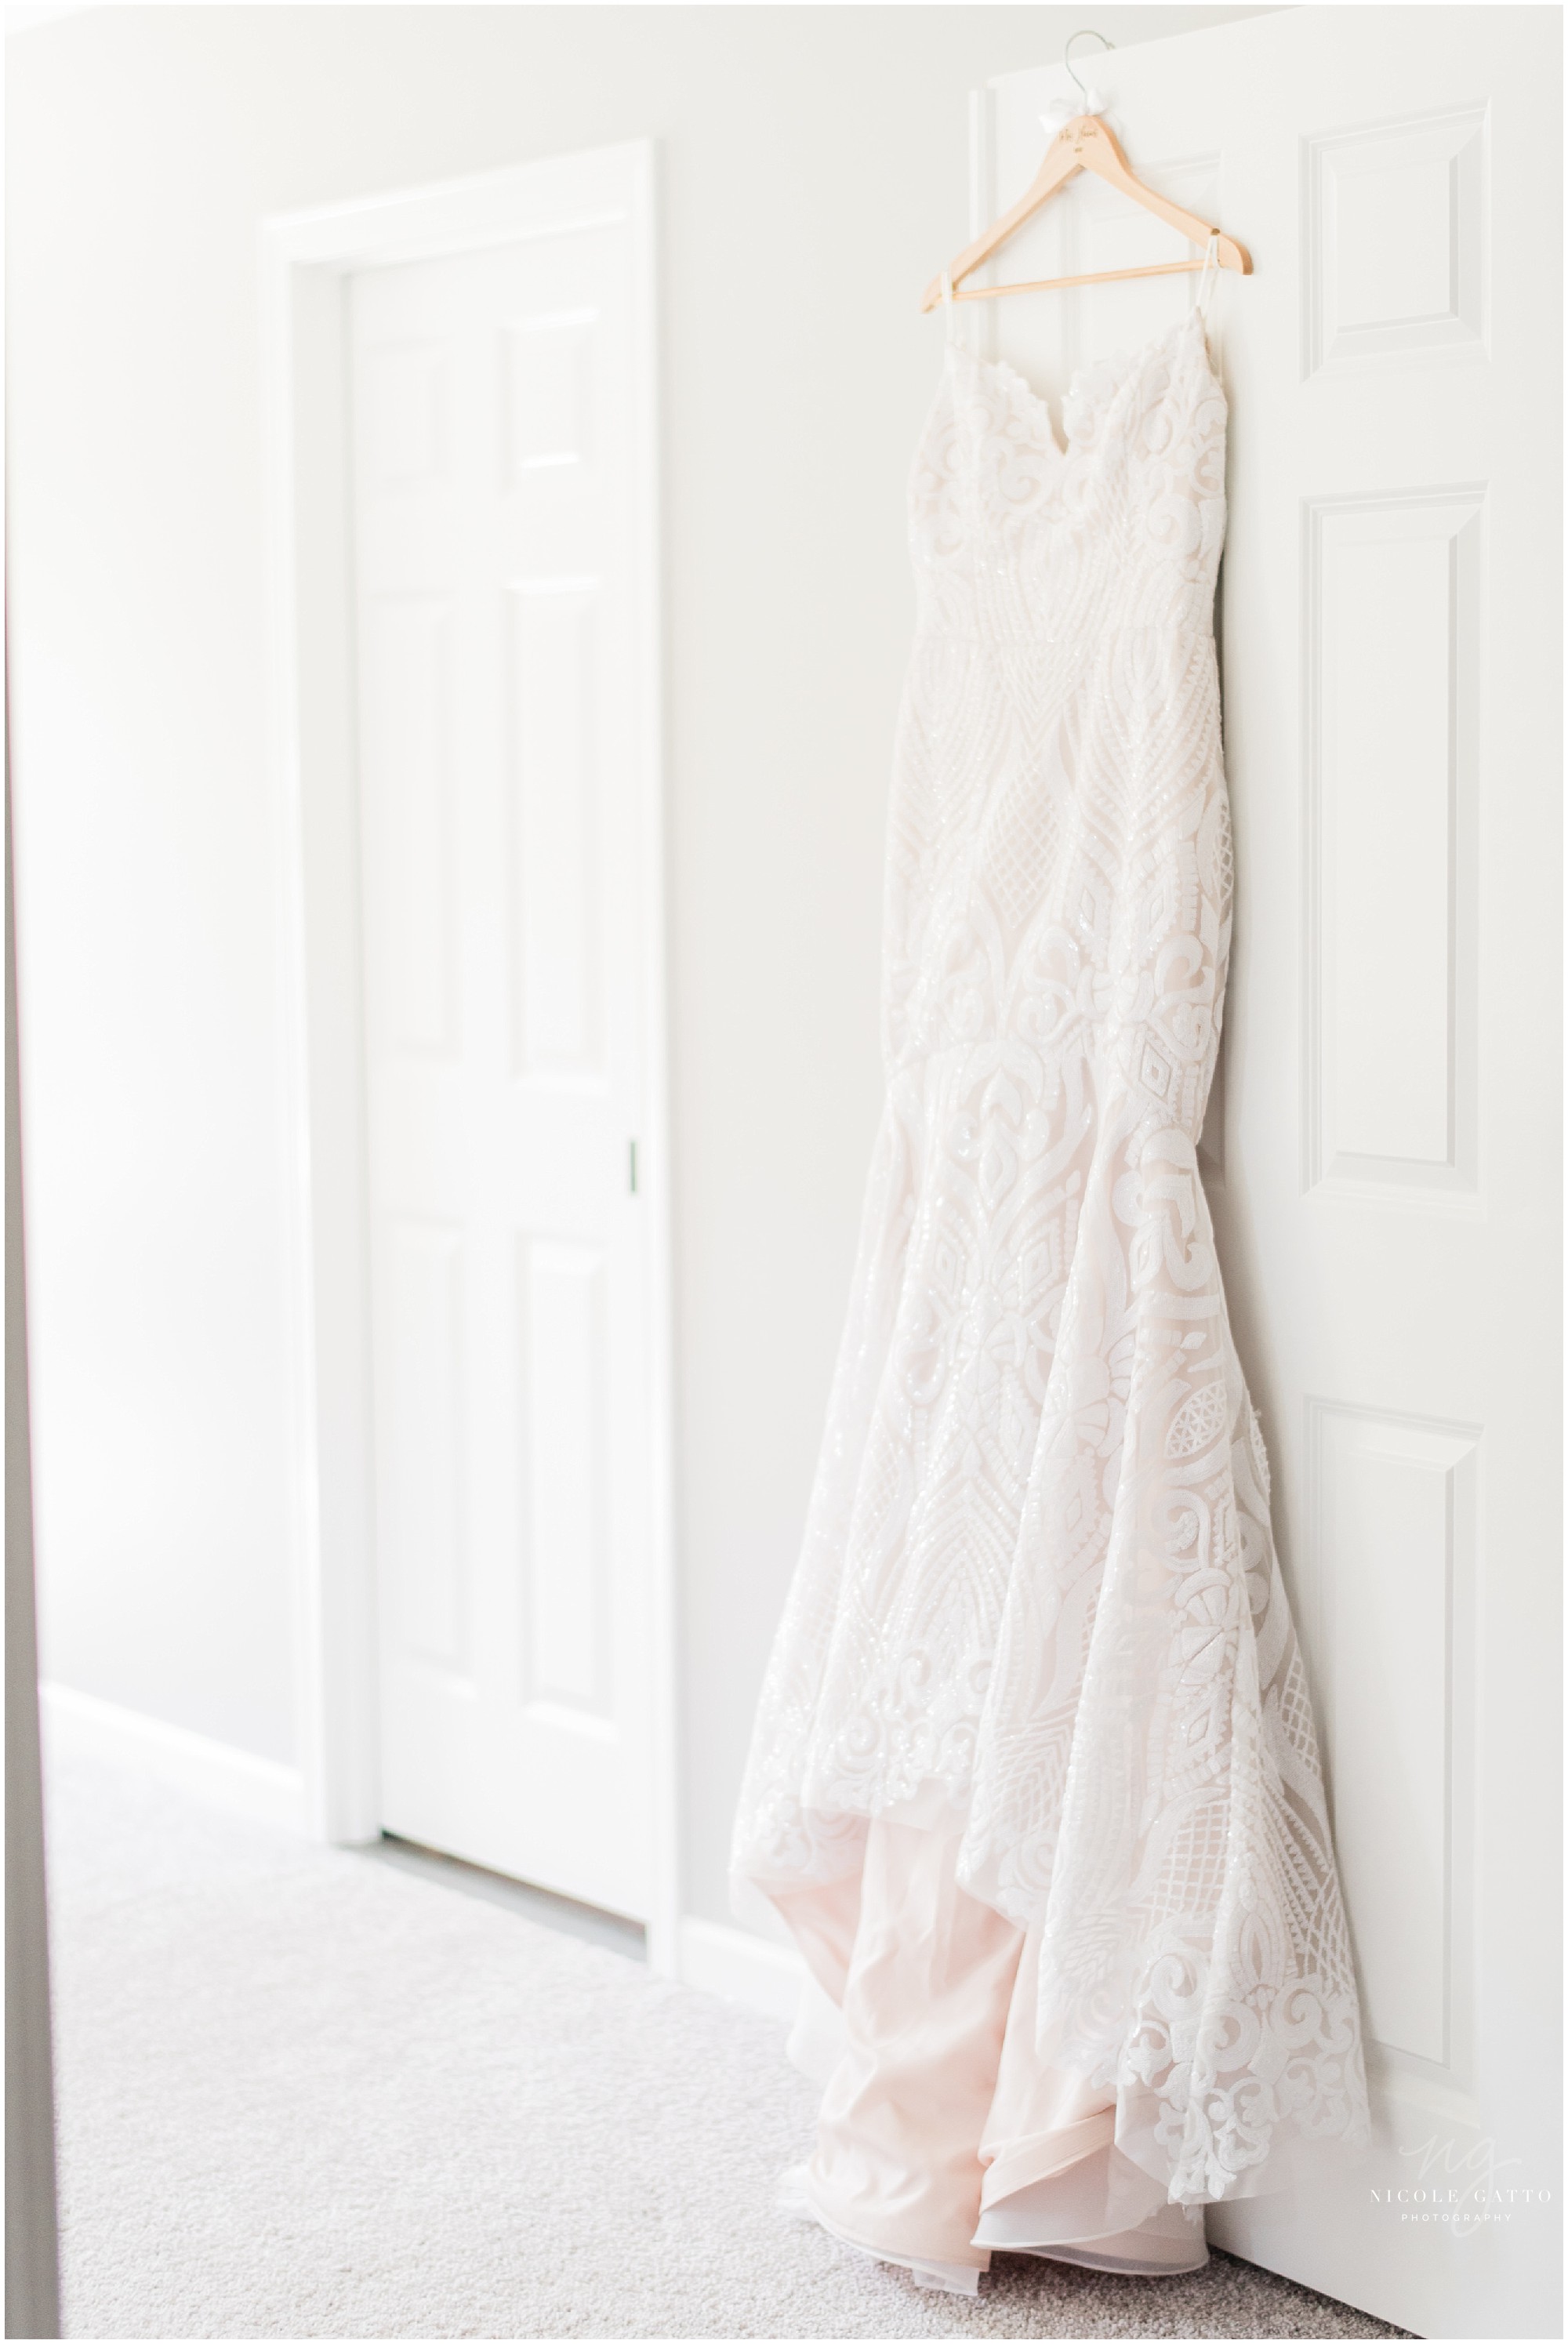 Miss Hayley Paige wedding dress hanging